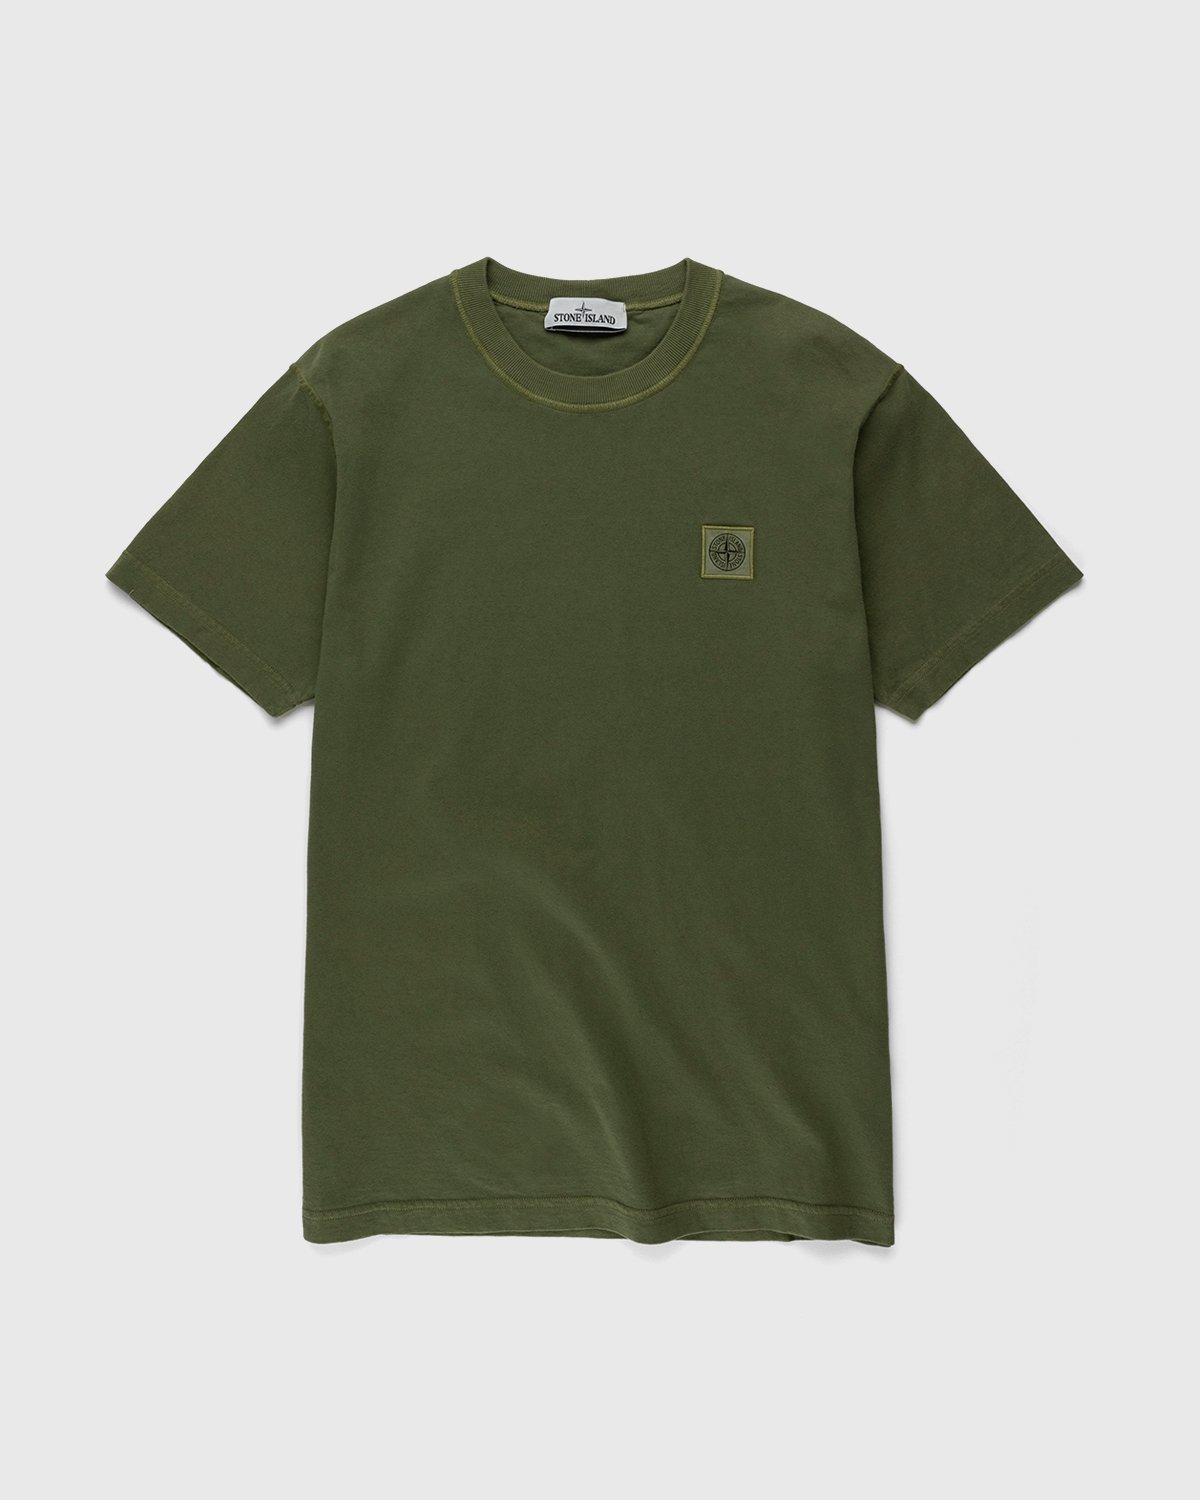 Stone Island - 23757 Garment-Dyed Fissato T-Shirt Olive Green - Clothing - Green - Image 1